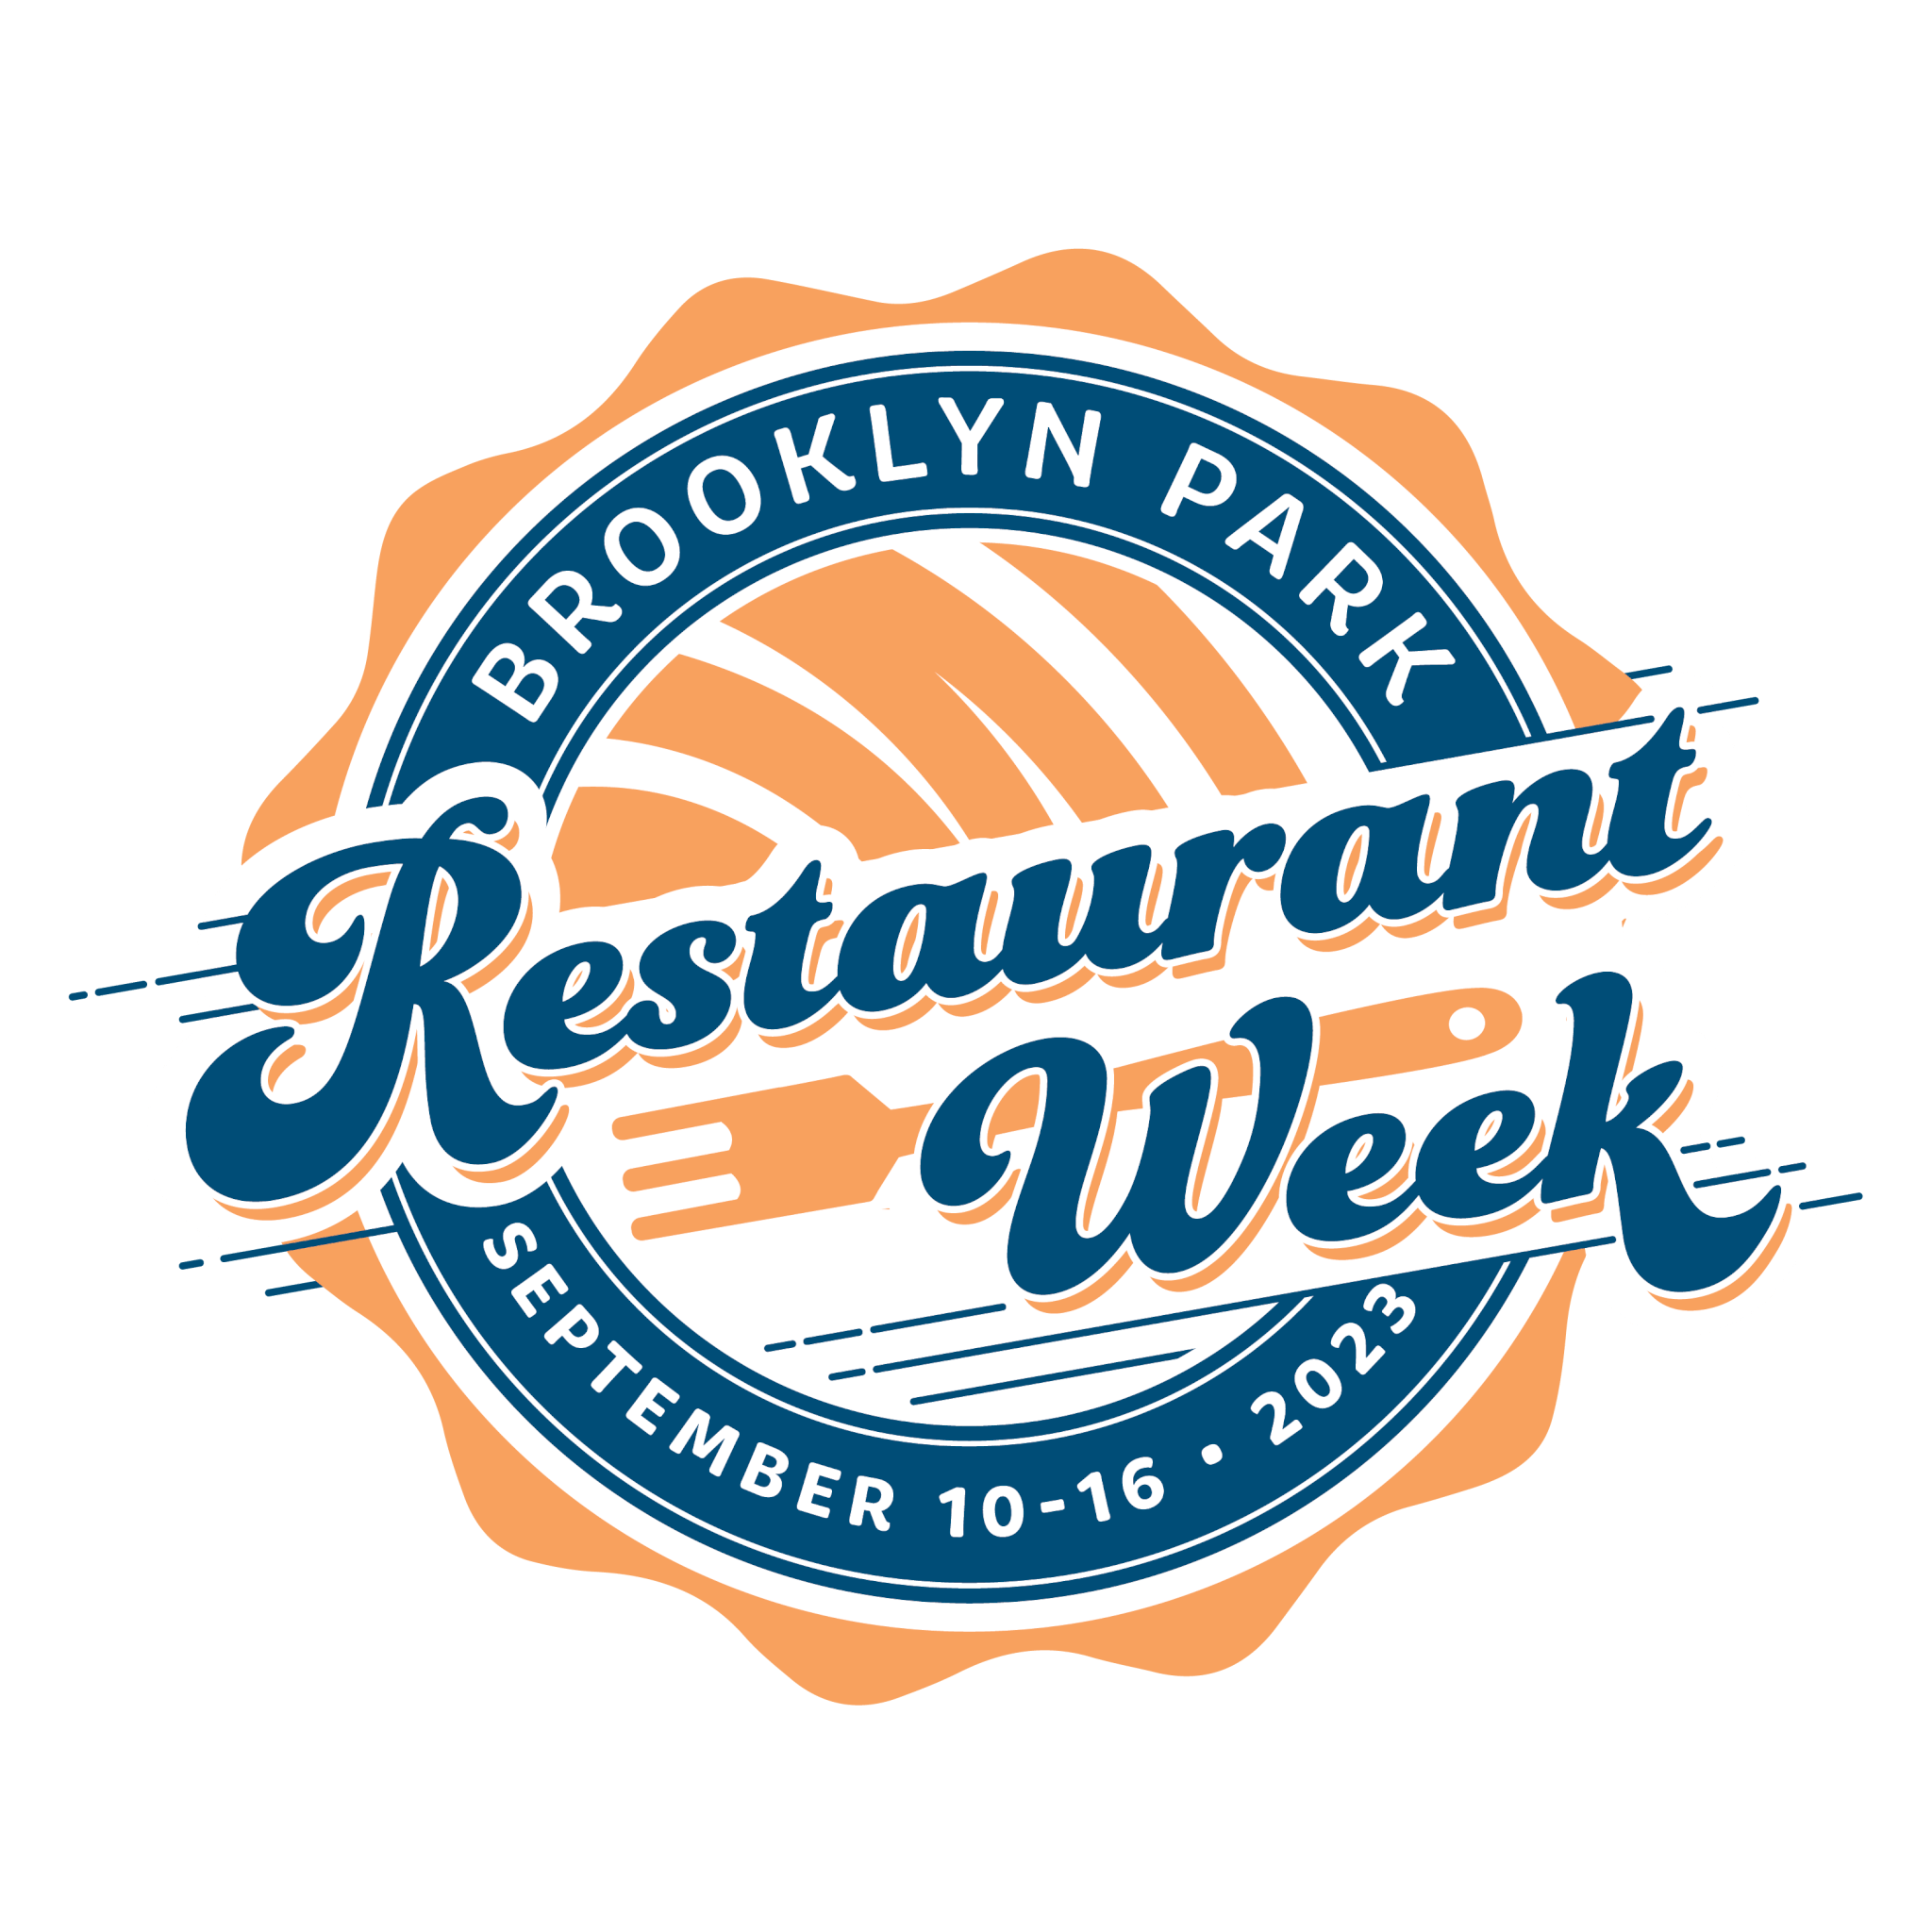 Brooklyn Park's Restaurant Week logo